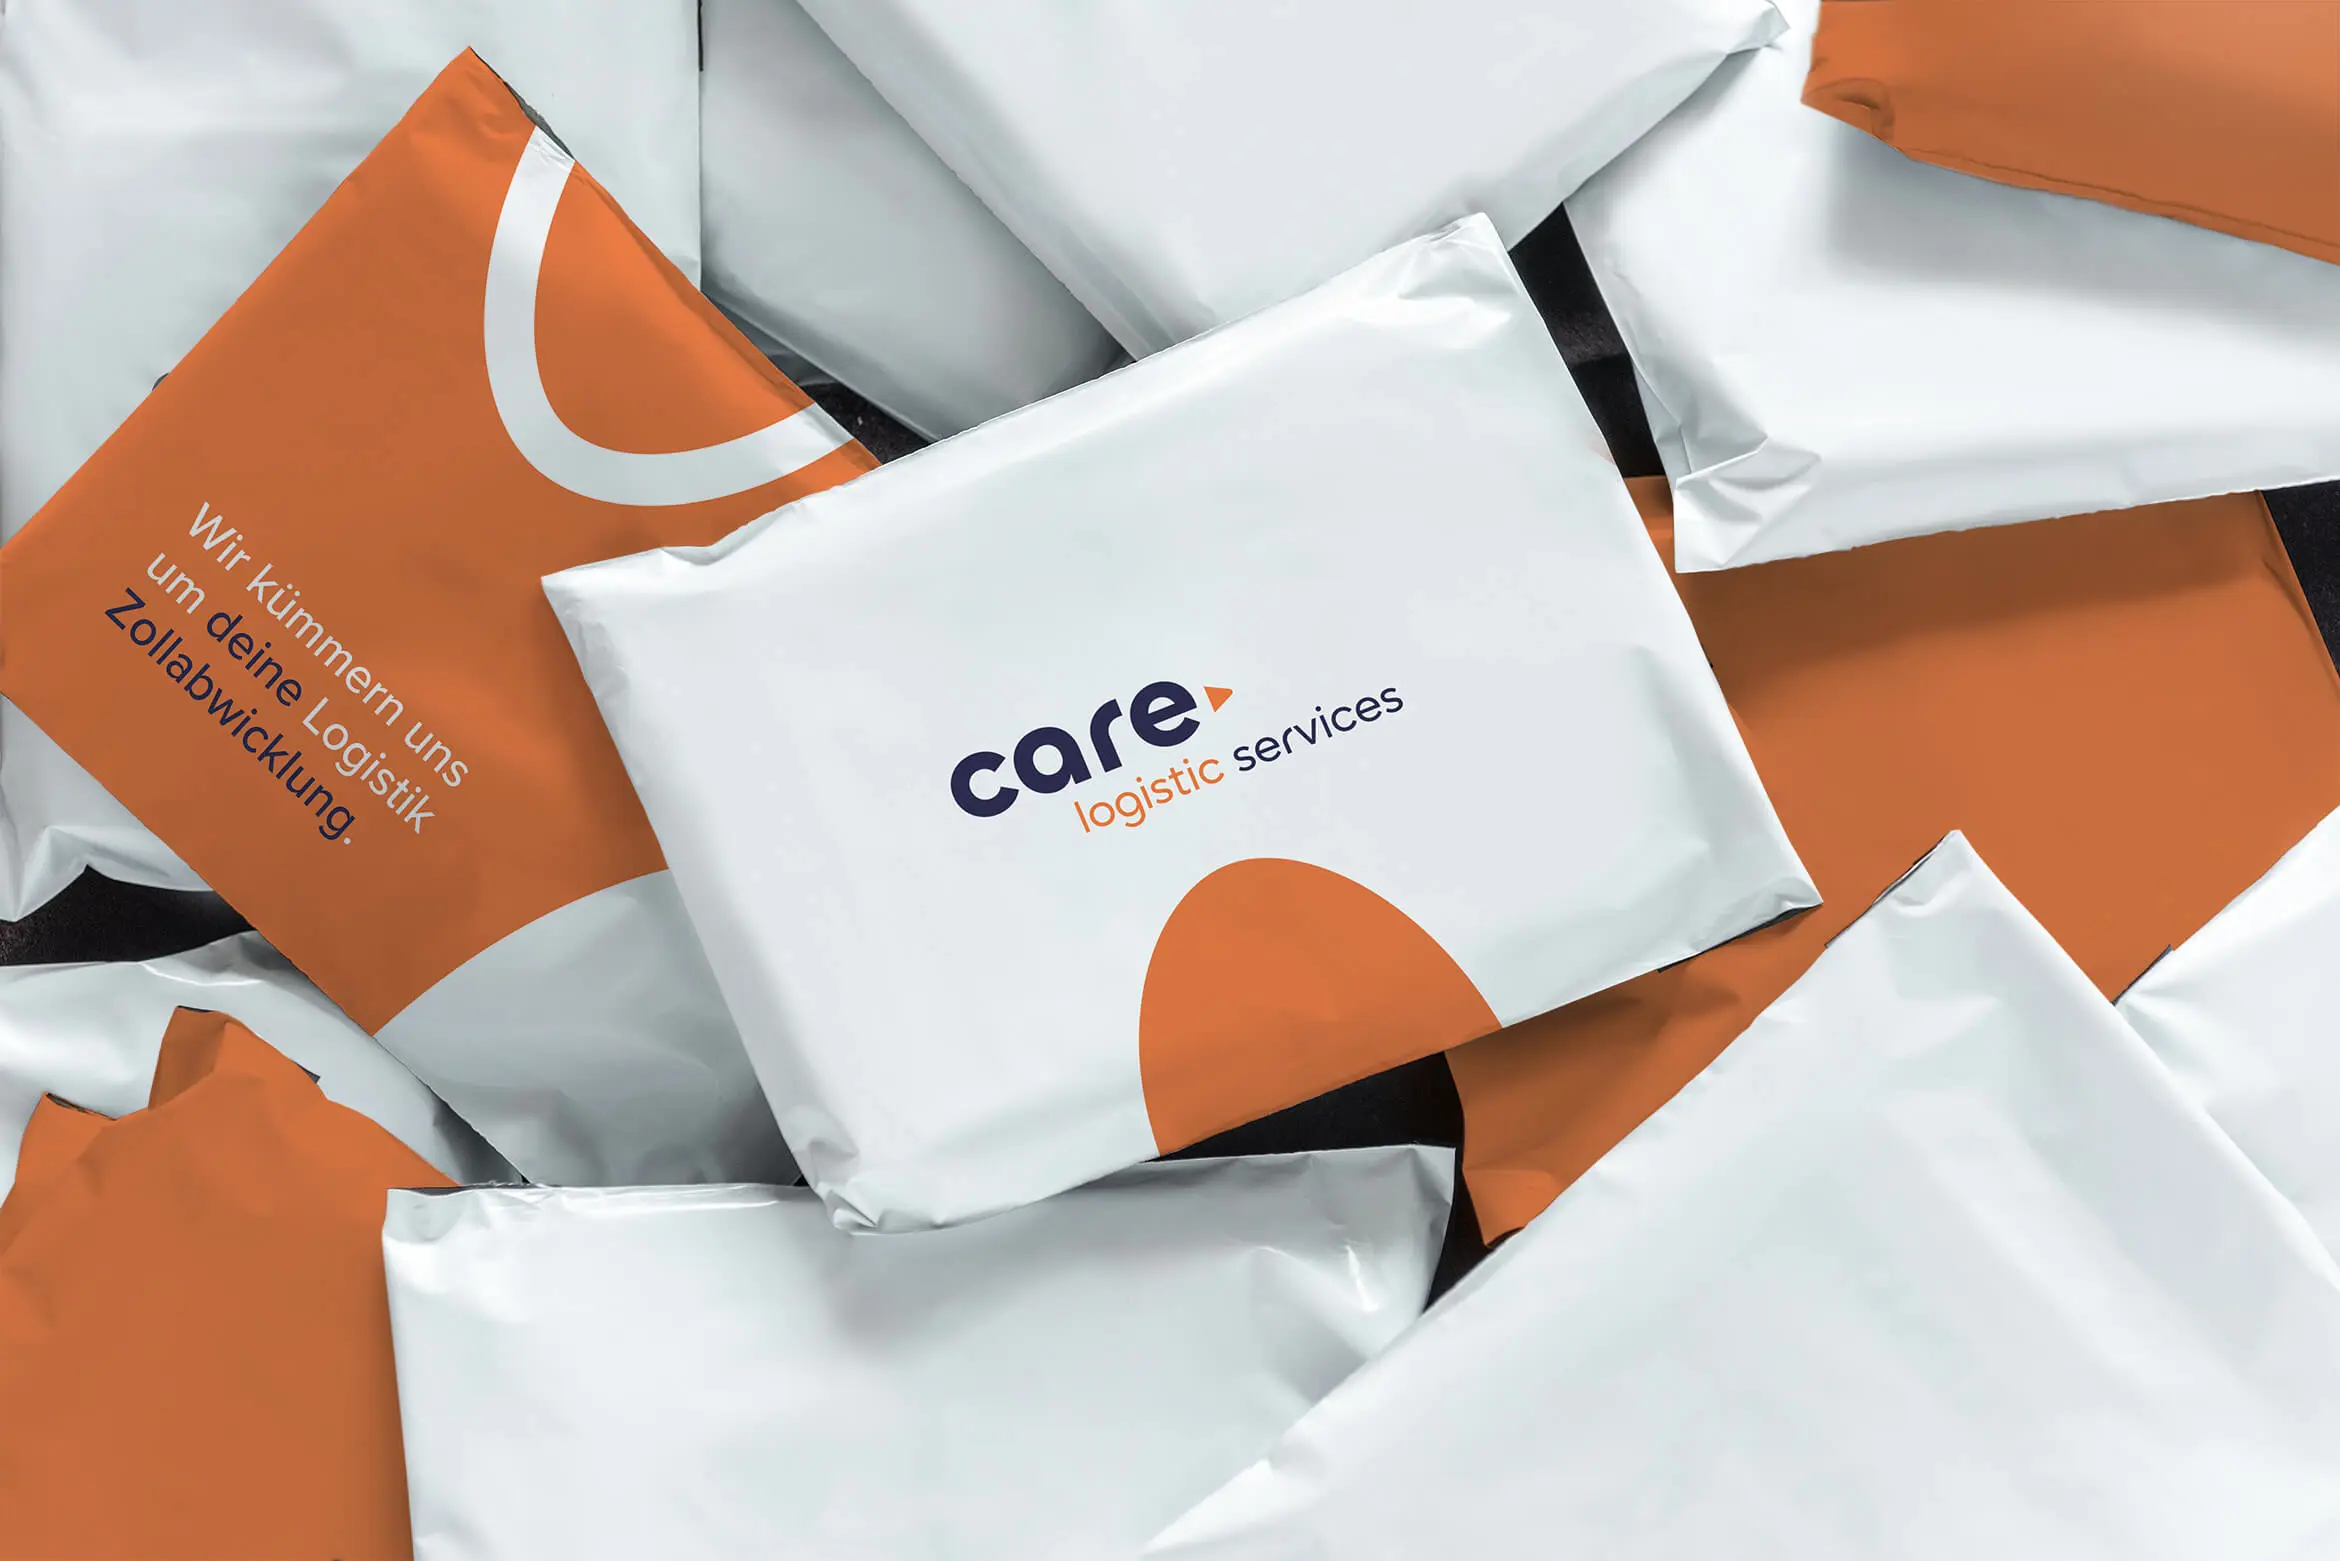 care logistic services case1